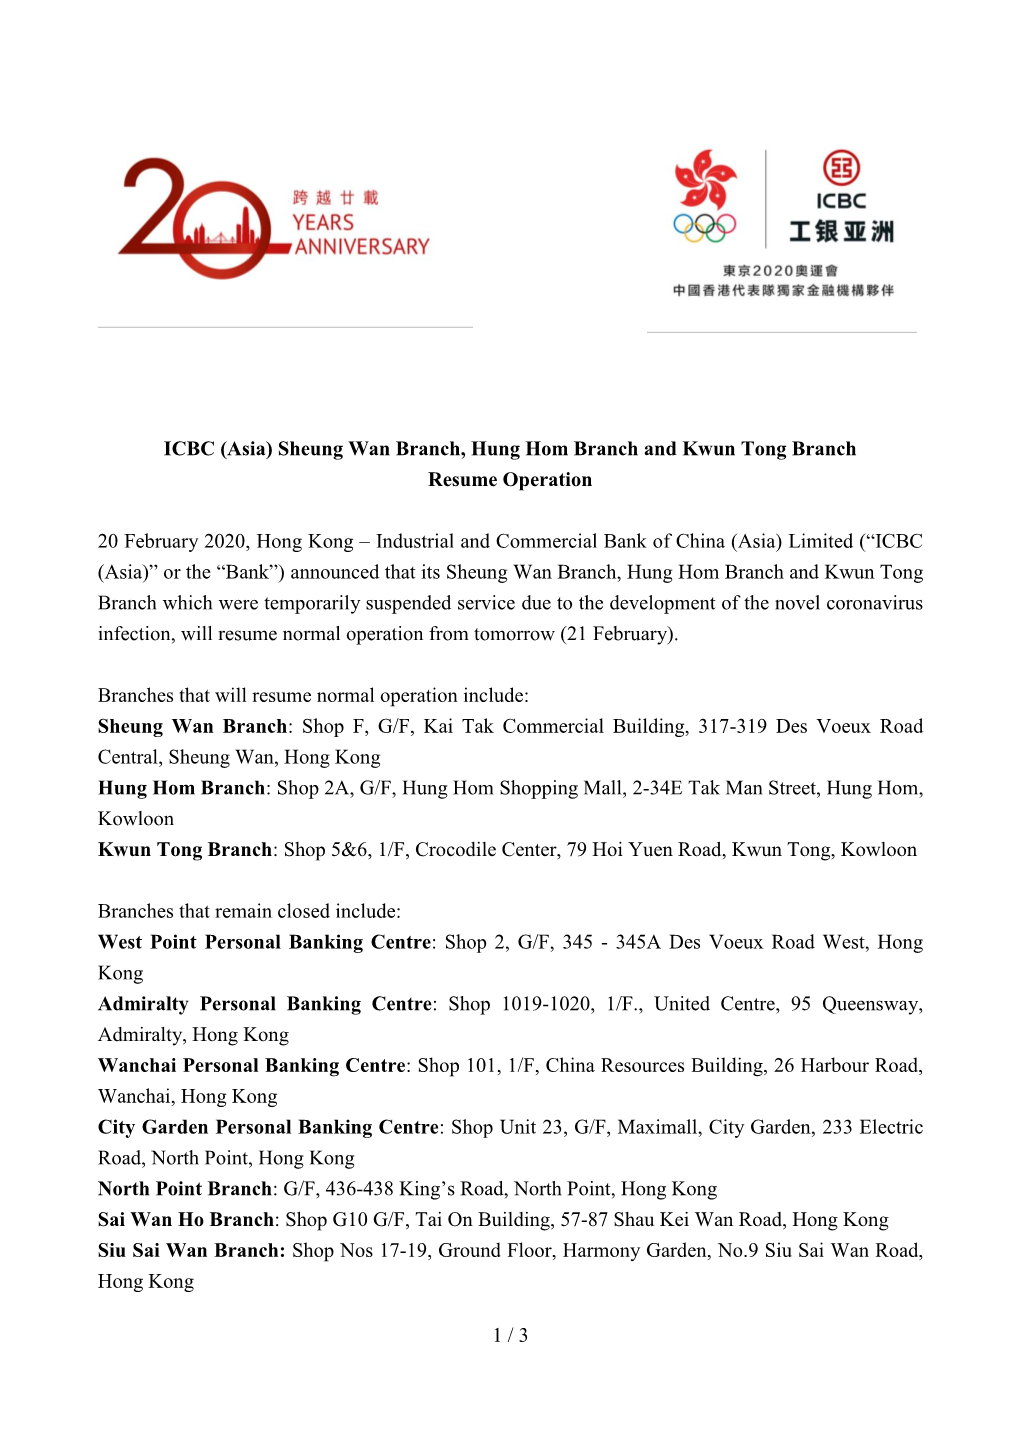 ICBC (Asia) Sheung Wan Branch, Hung Hom Branch and Kwun Tong Branch Resume Operation